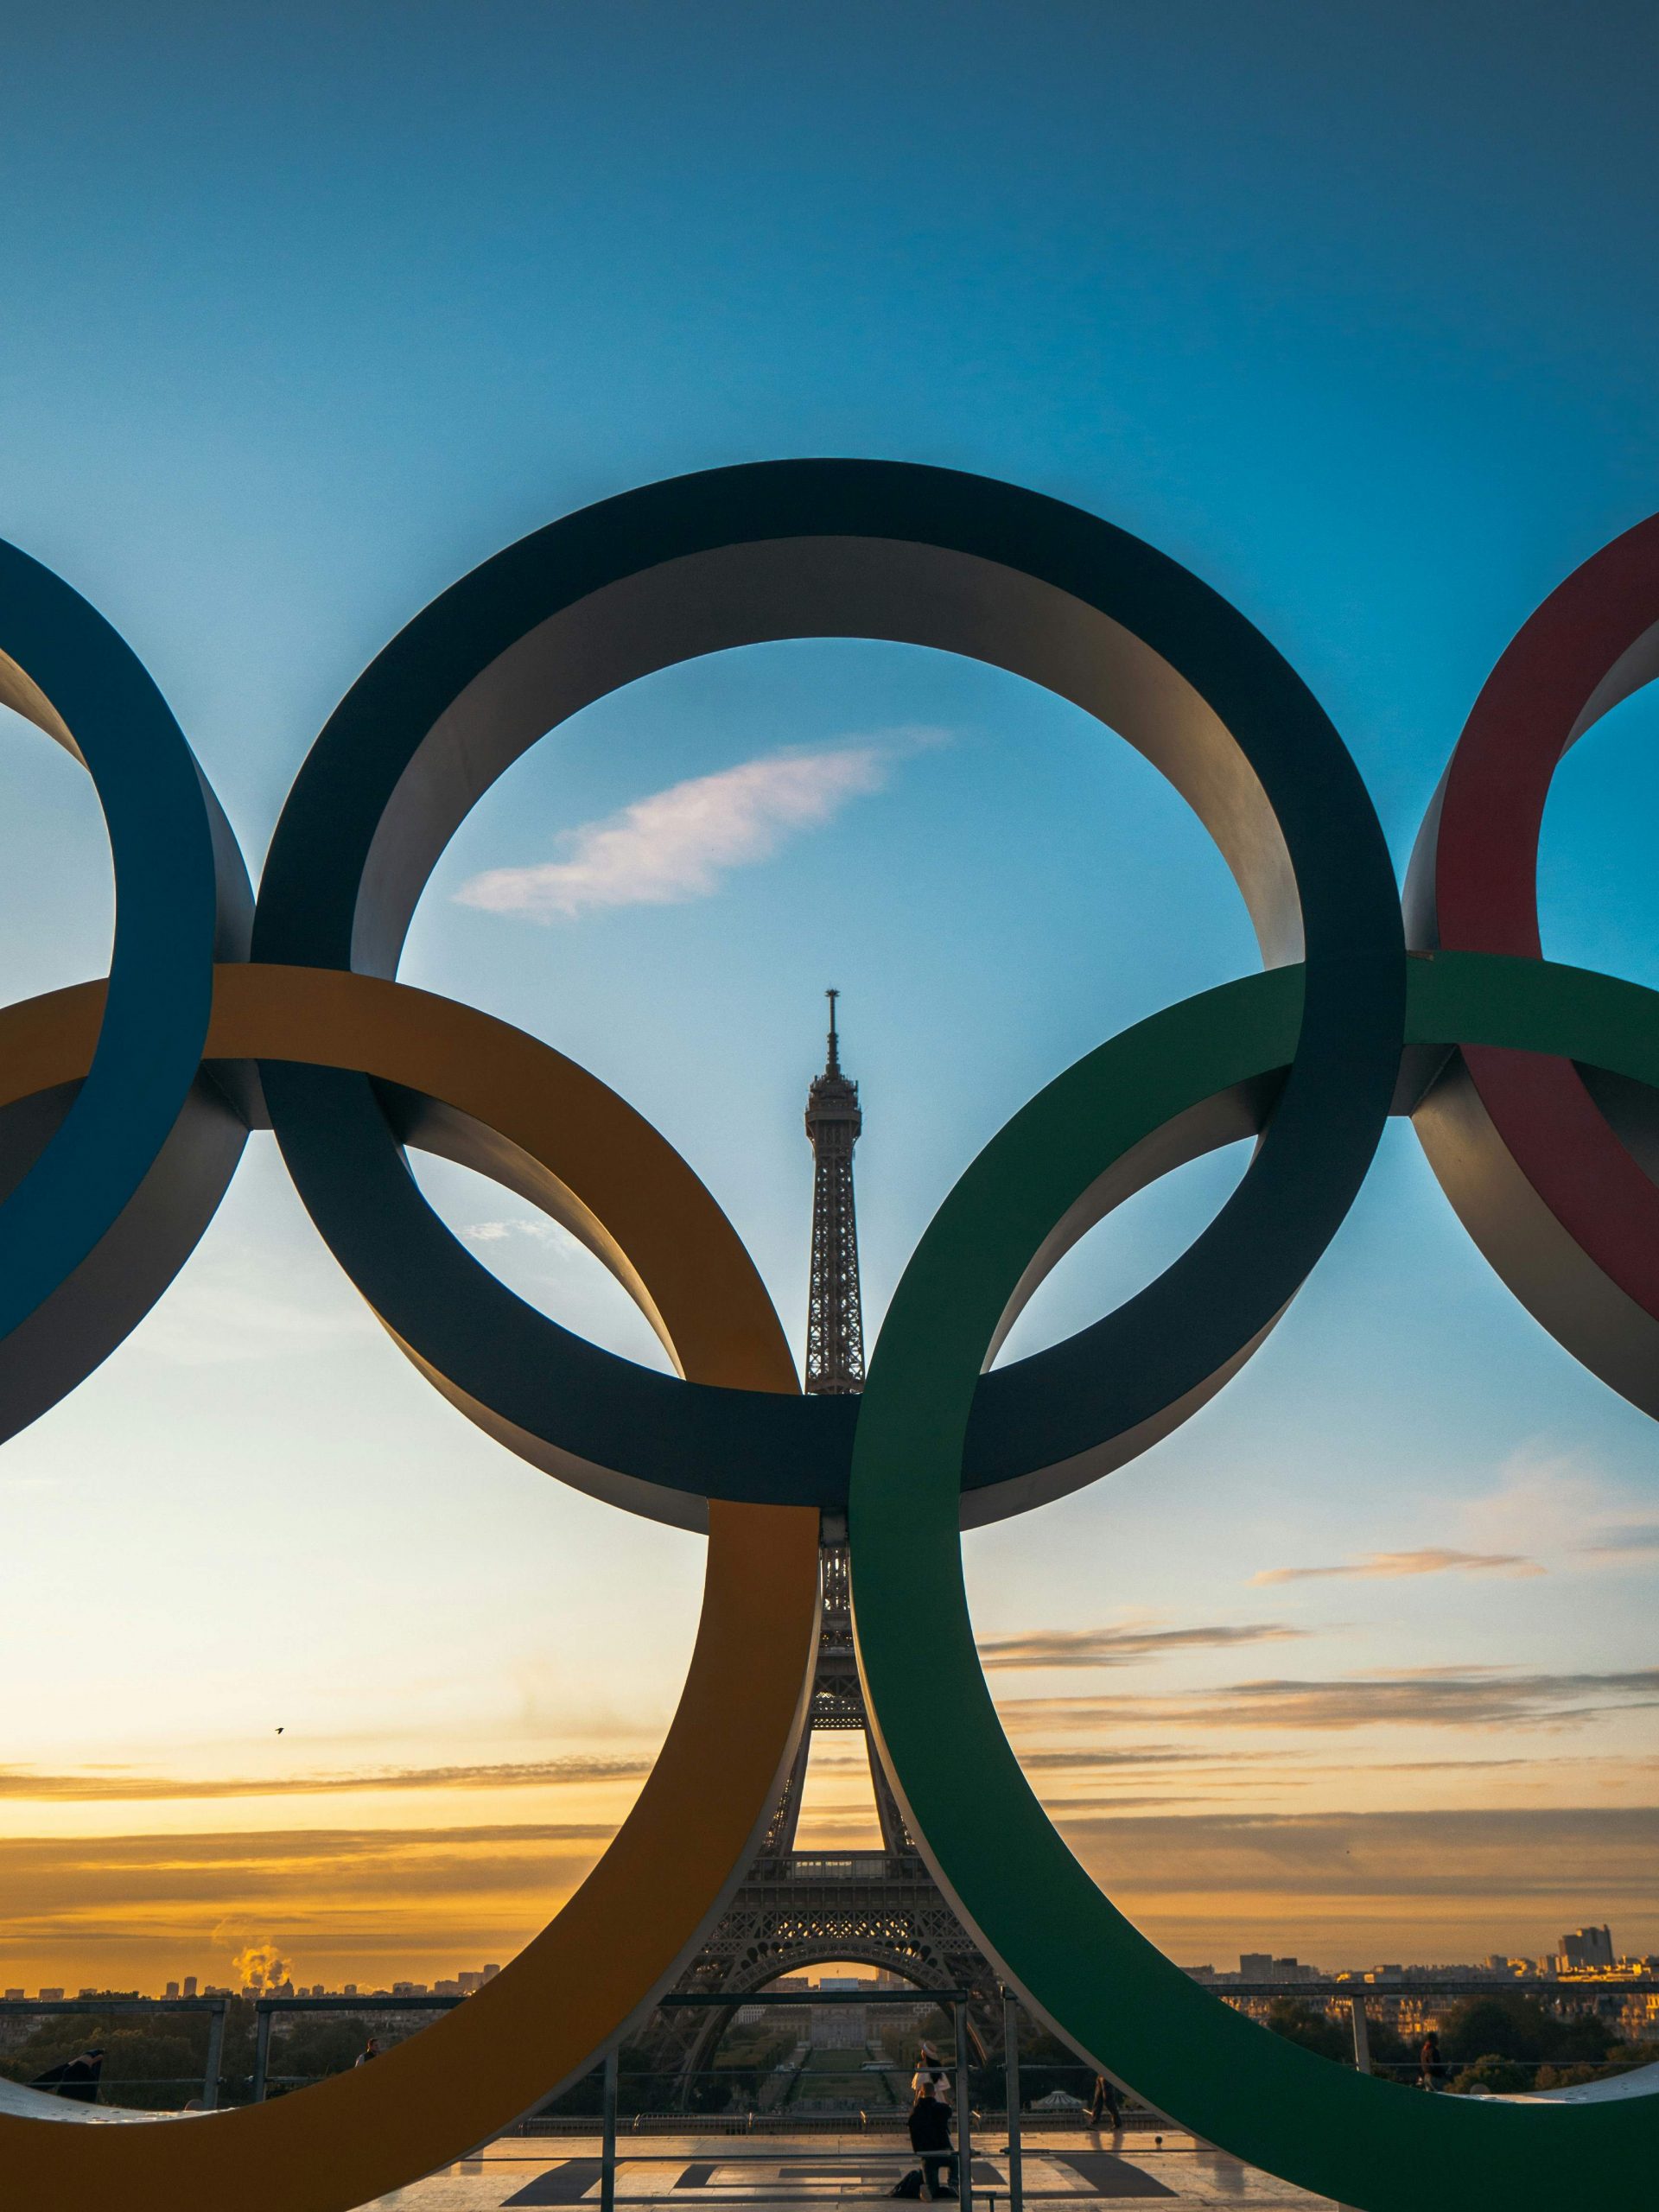 Private Jet Travel to Paris 2024 Olympics